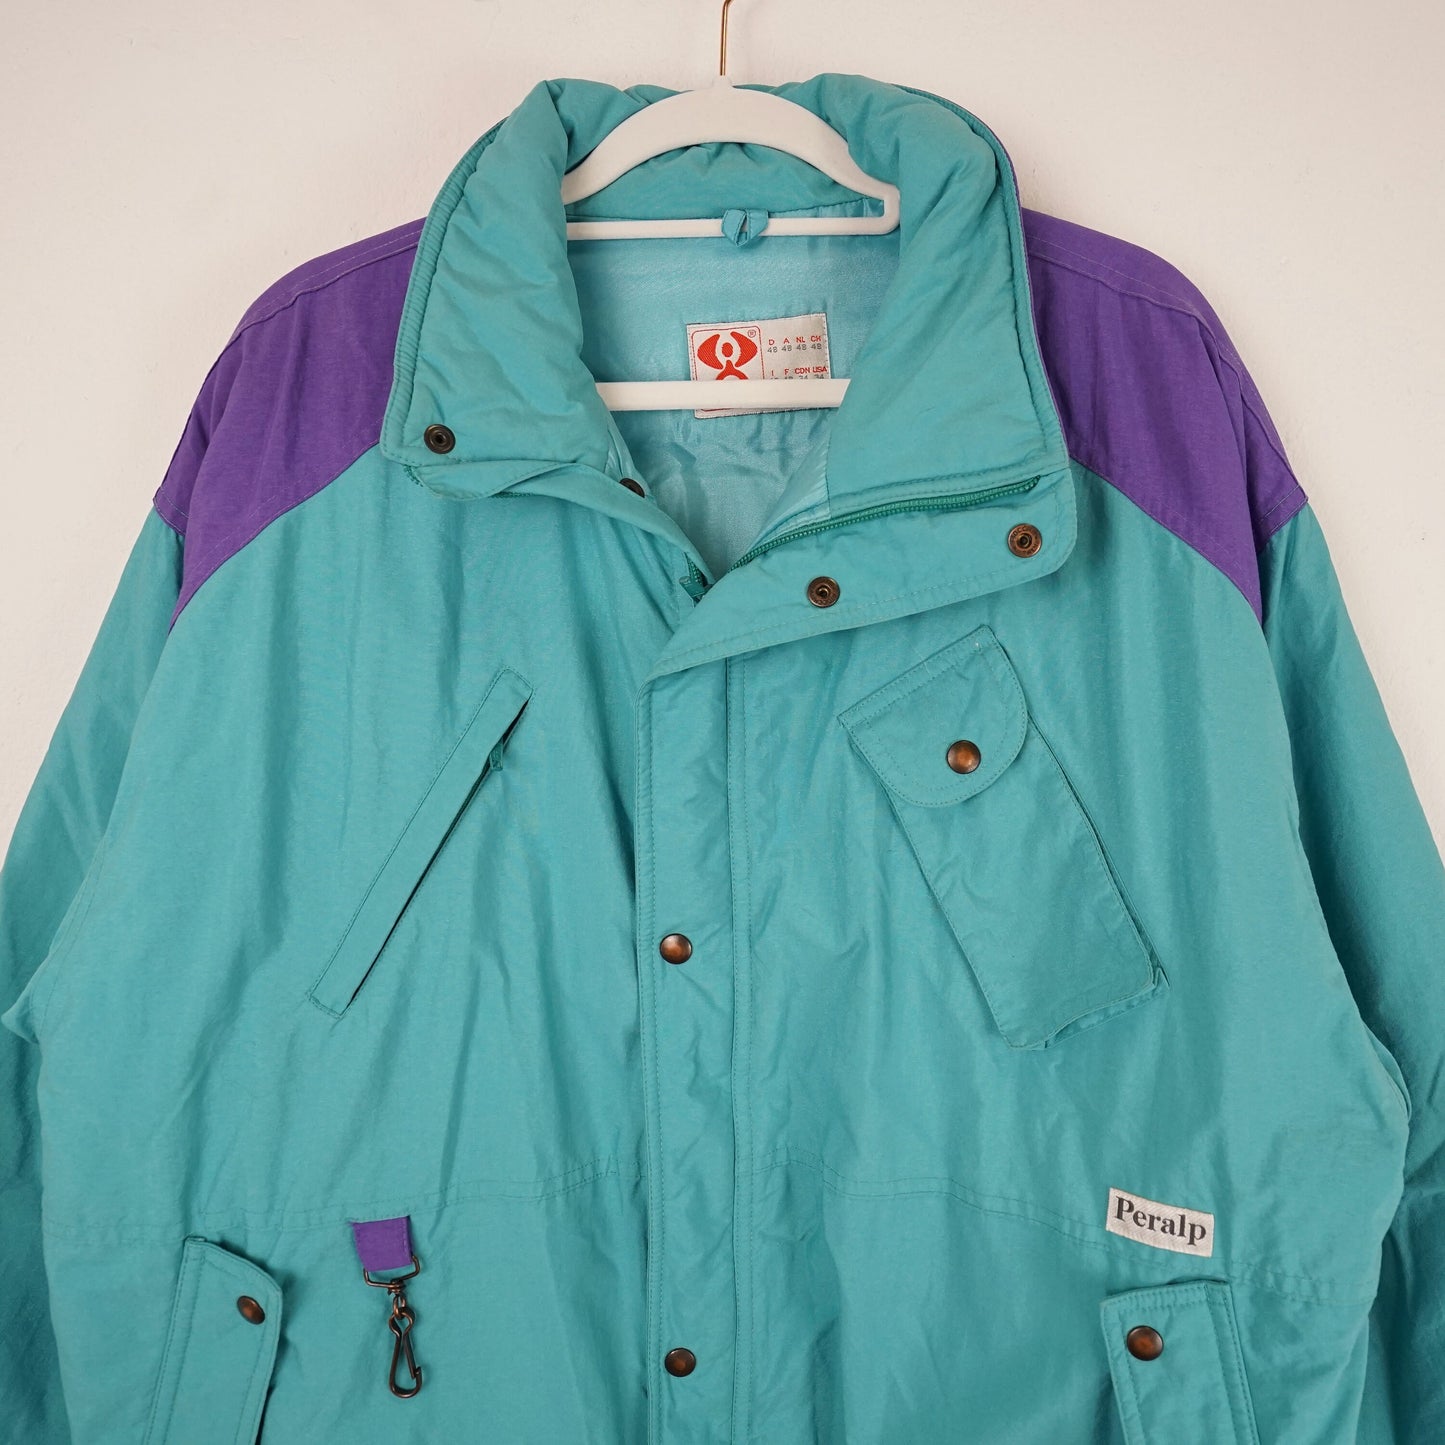 Vintage Ski Jacket men Size L turquoise purple